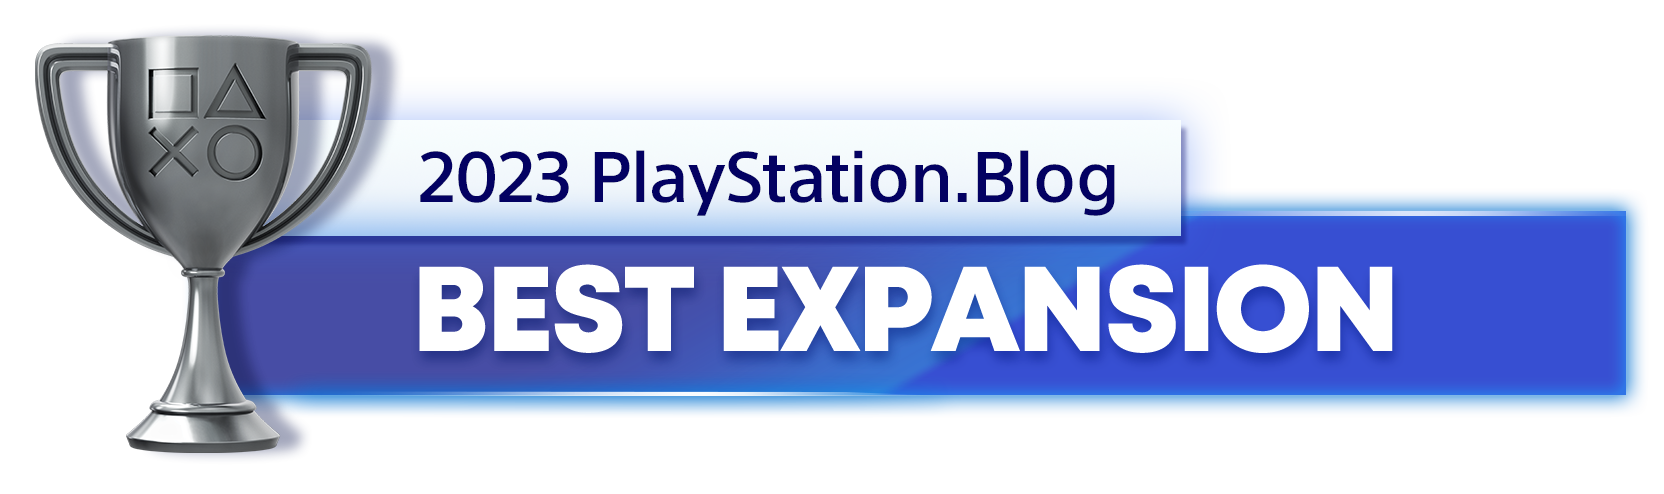  "Silver Trophy for the 2023 PlayStation Blog Best Expansion Winner"